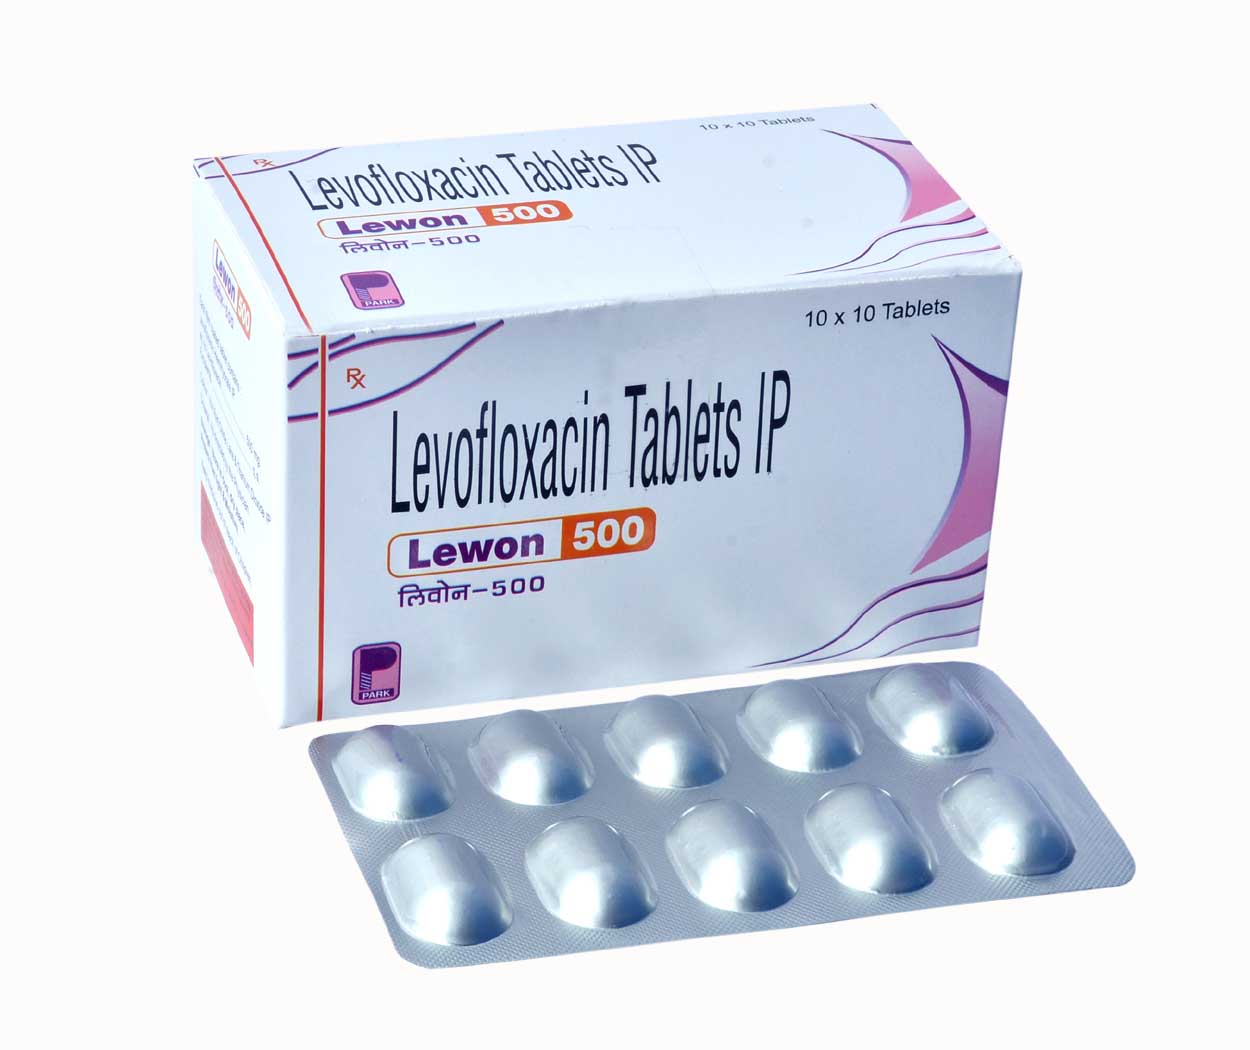 Product Name: Lewon 500, Compositions of Lewon 500 are Levofloxacin Tablets IP - Park Pharmaceuticals